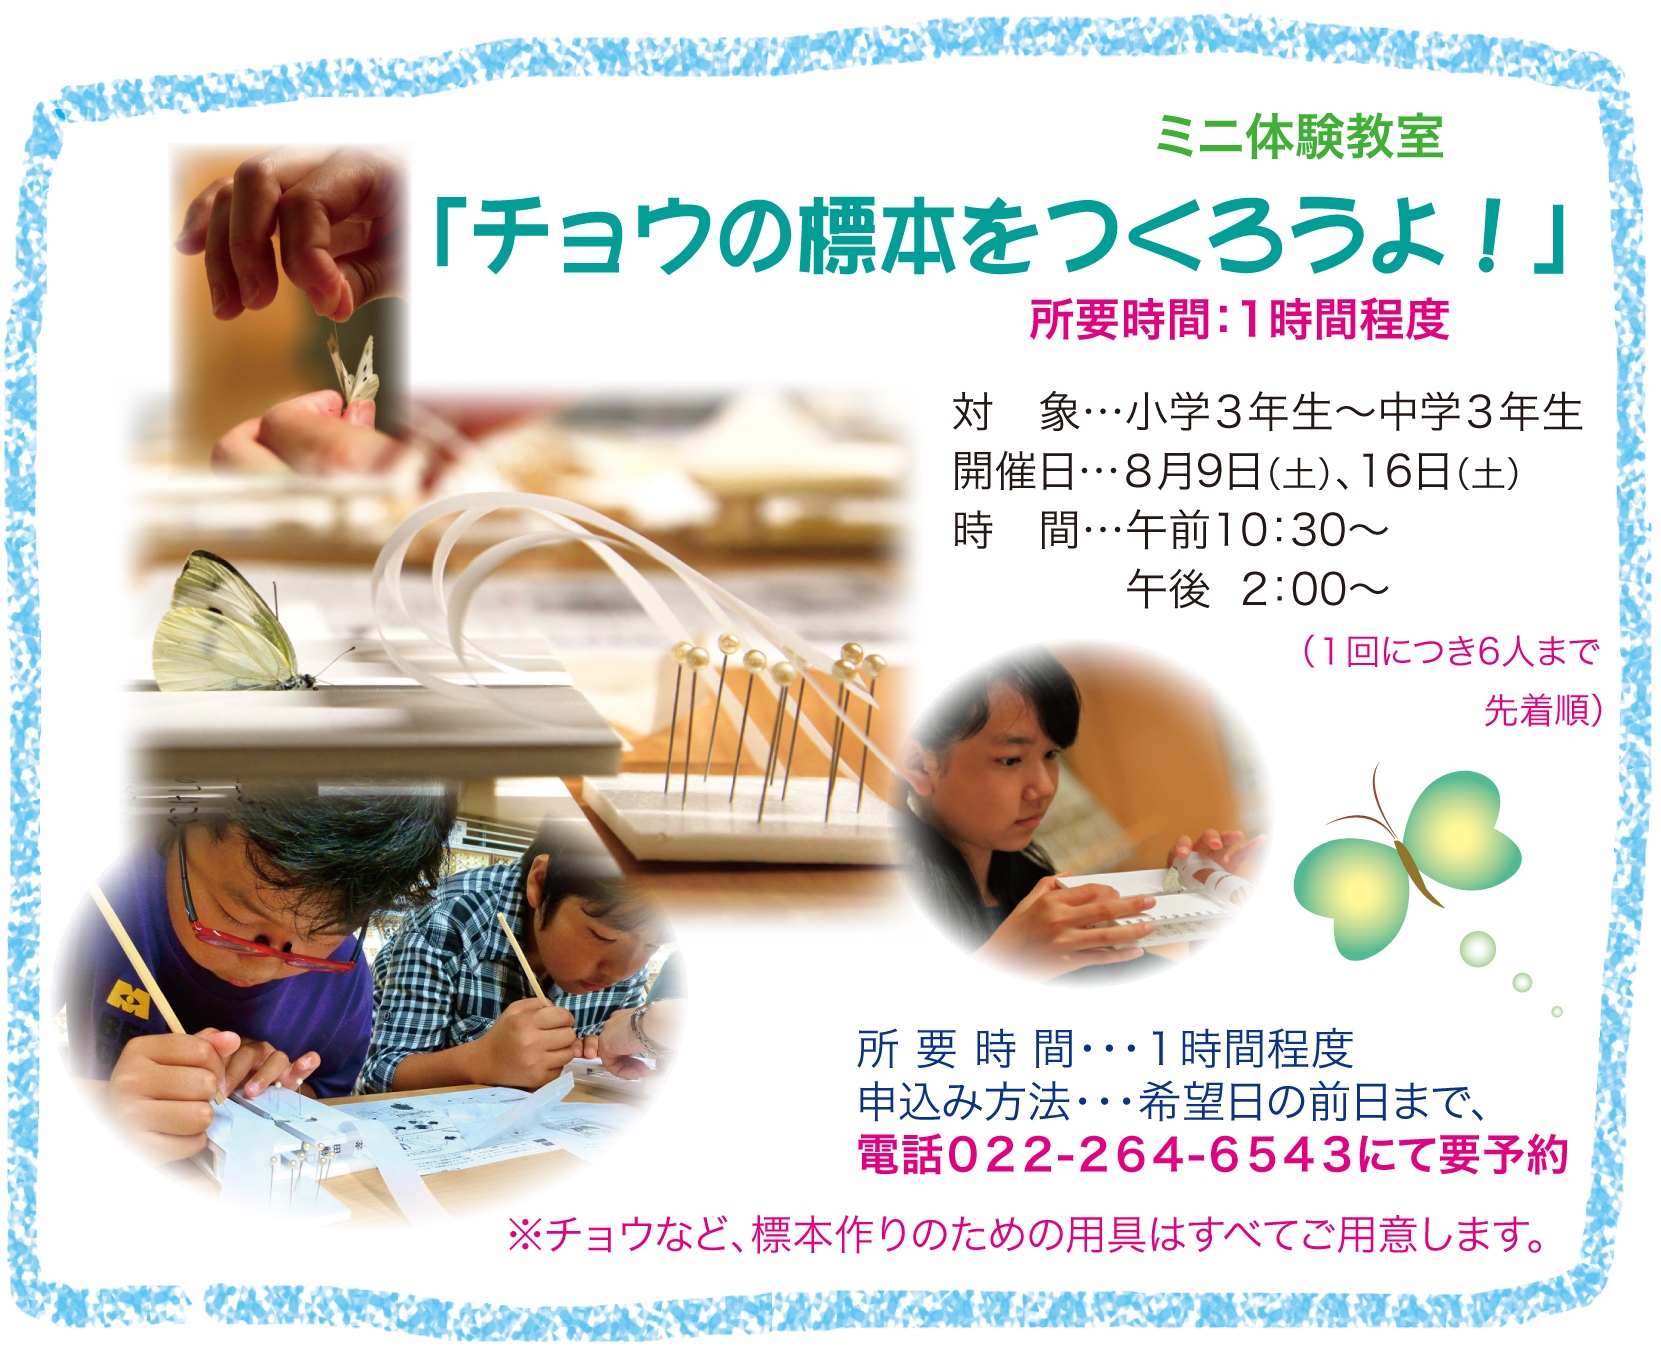 http://www.kameimuseum.or.jp/topics/2014/07/09/%E3%81%86%E3%82%89%E8%9D%B6.jpg